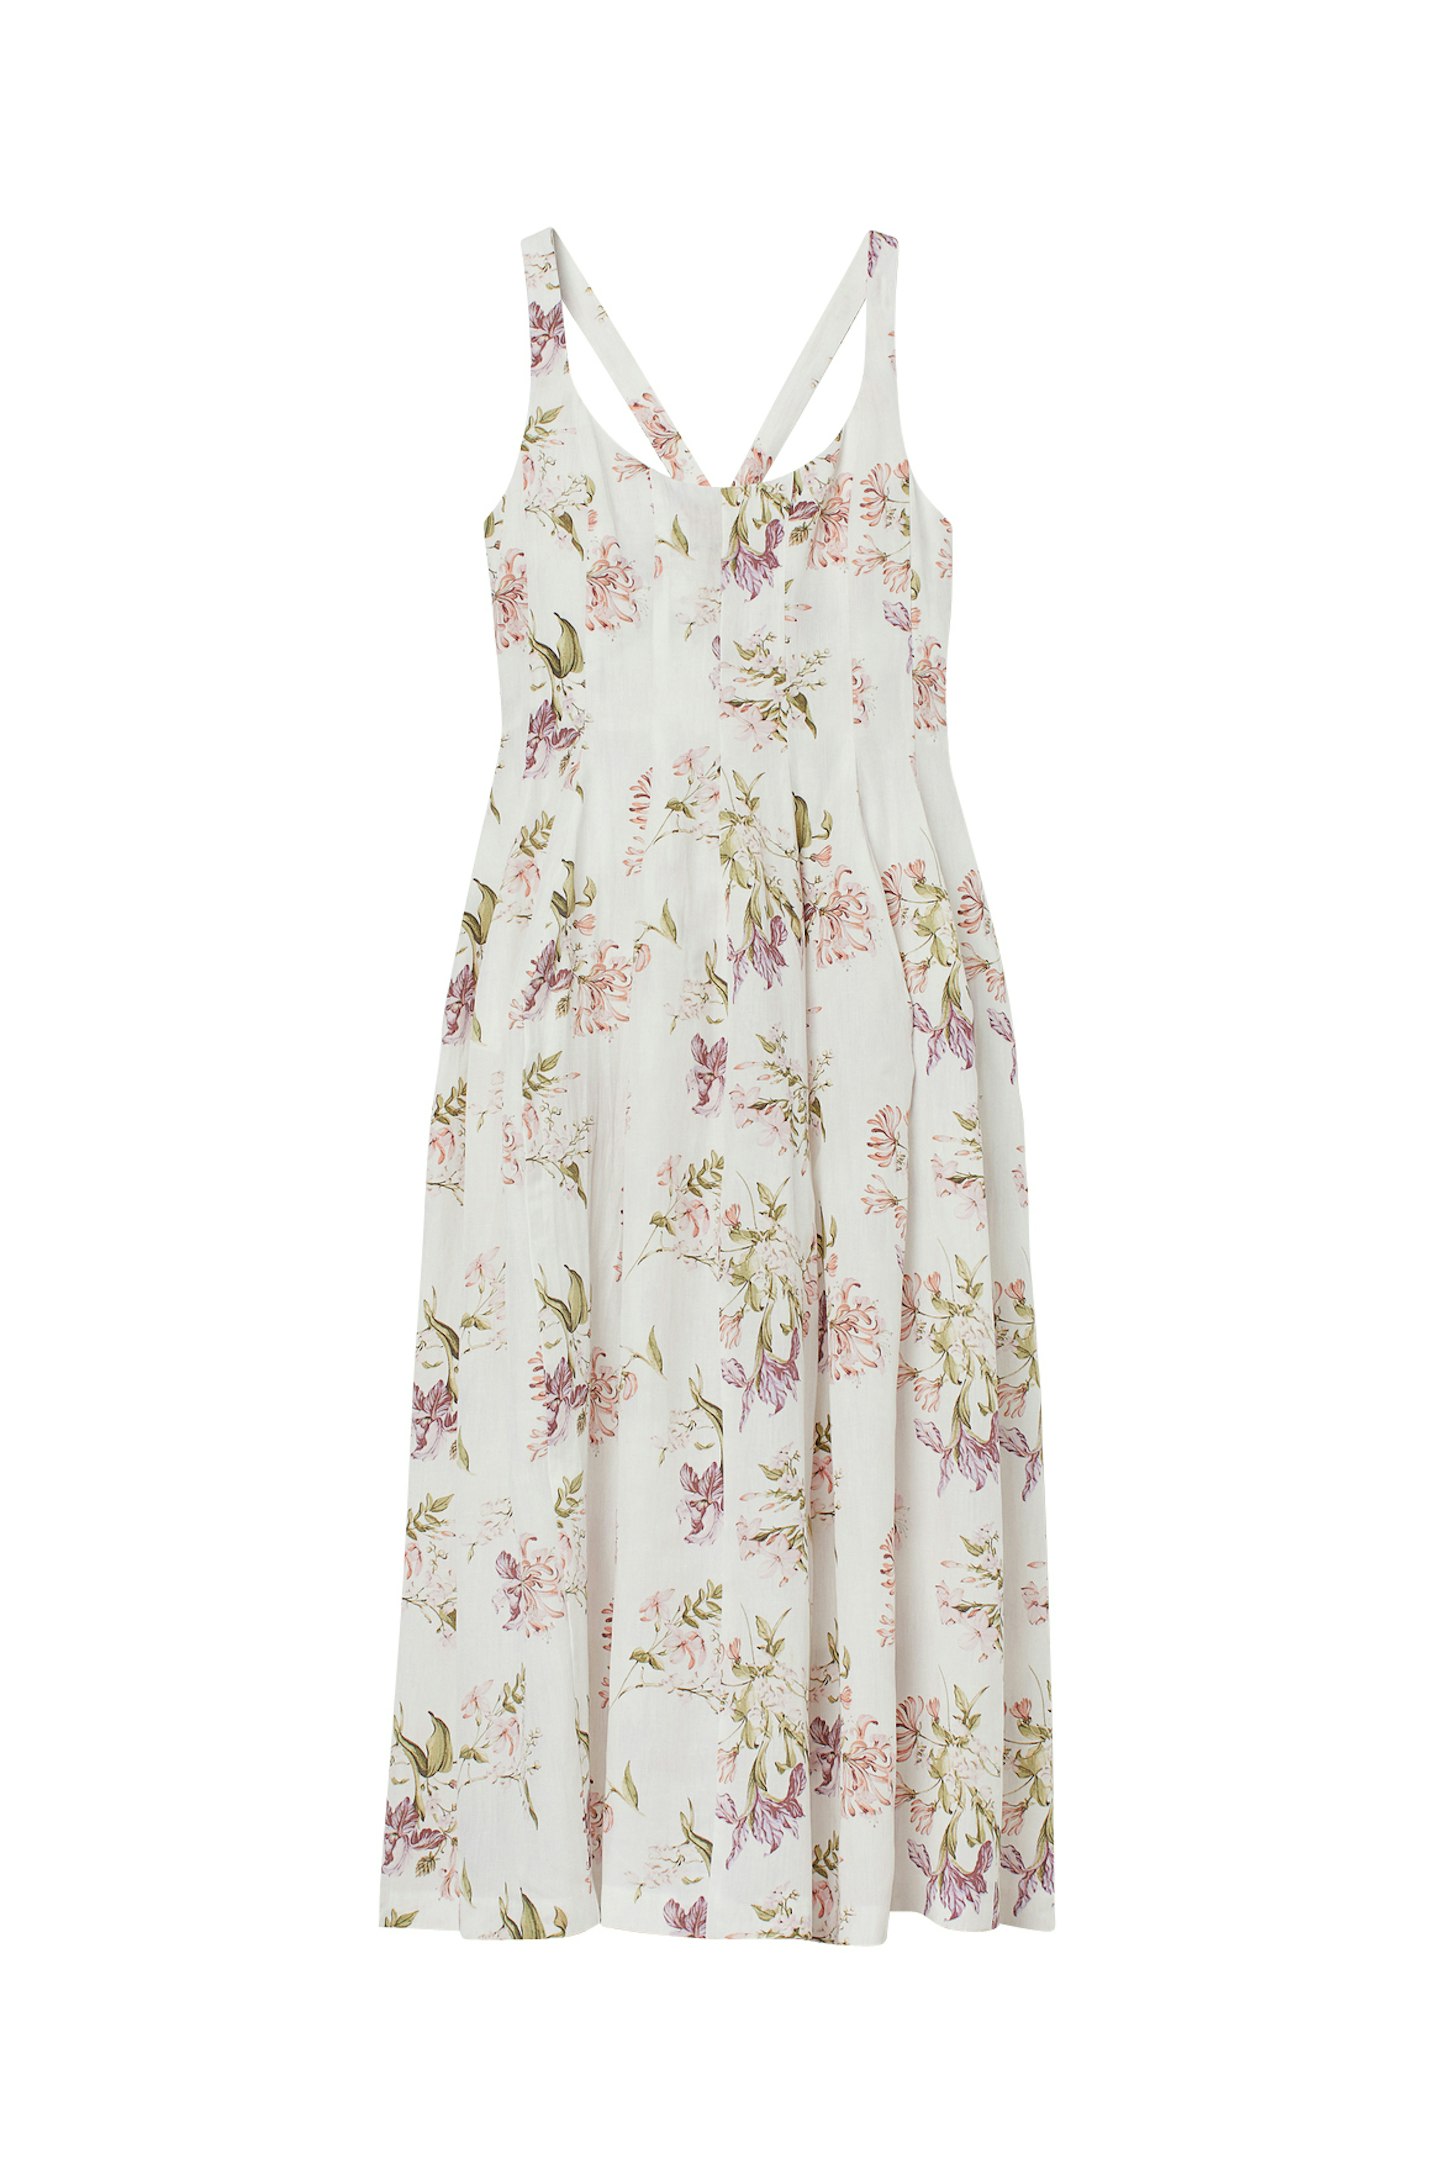 Floral Cross-Strap Dress, £34.99